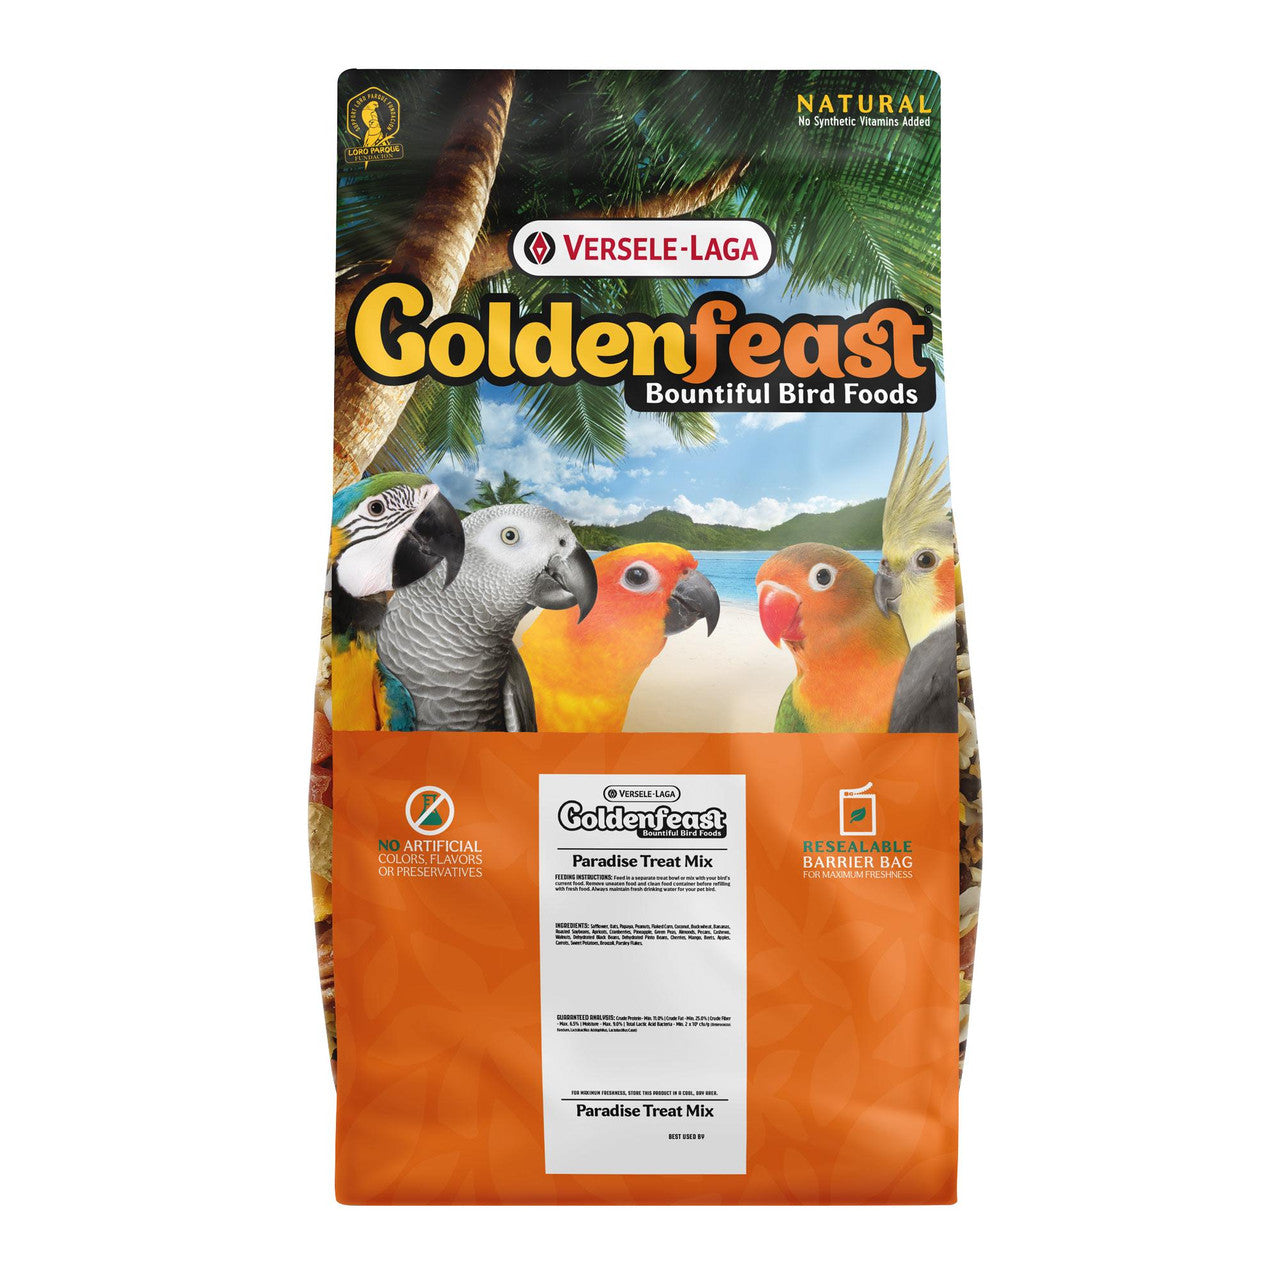 Goldenfeast Paradise Treat Mix Bird Food 17.5 lb 046706822621